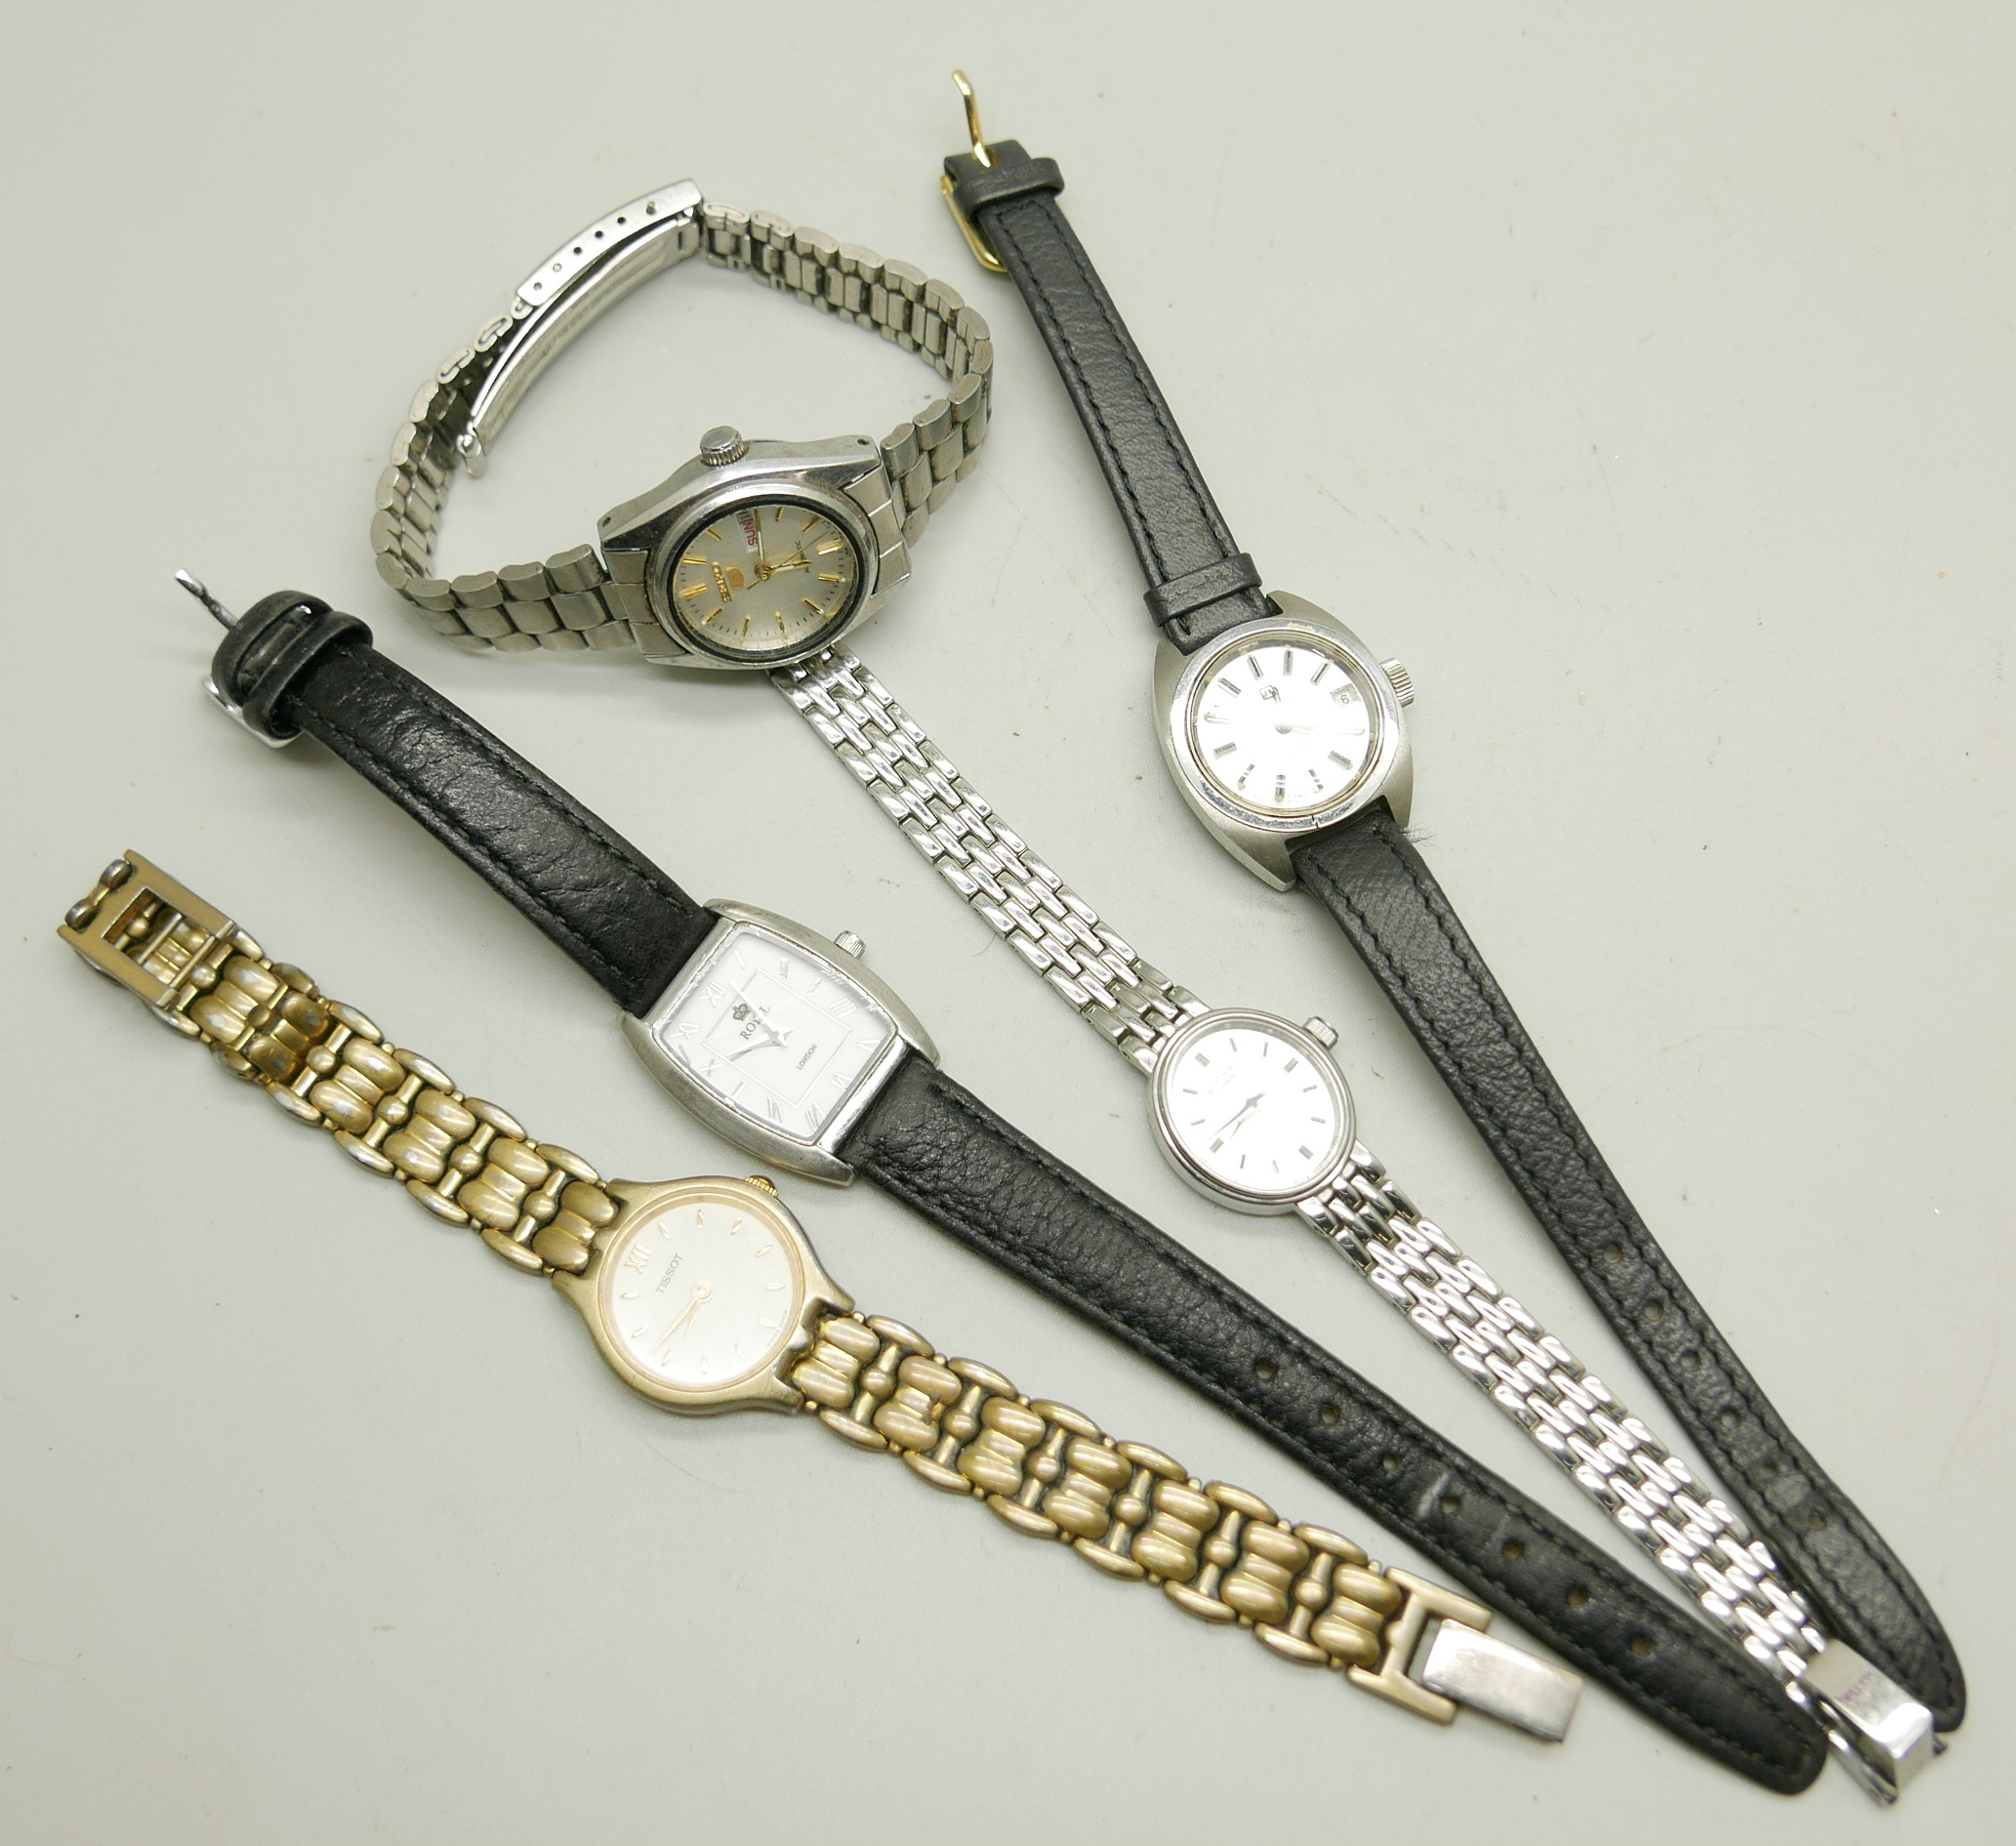 Five lady's wristwatches, Seiko 5 automatic, Tissot automatic Sea Star, a Tissot quartz, a Rotary